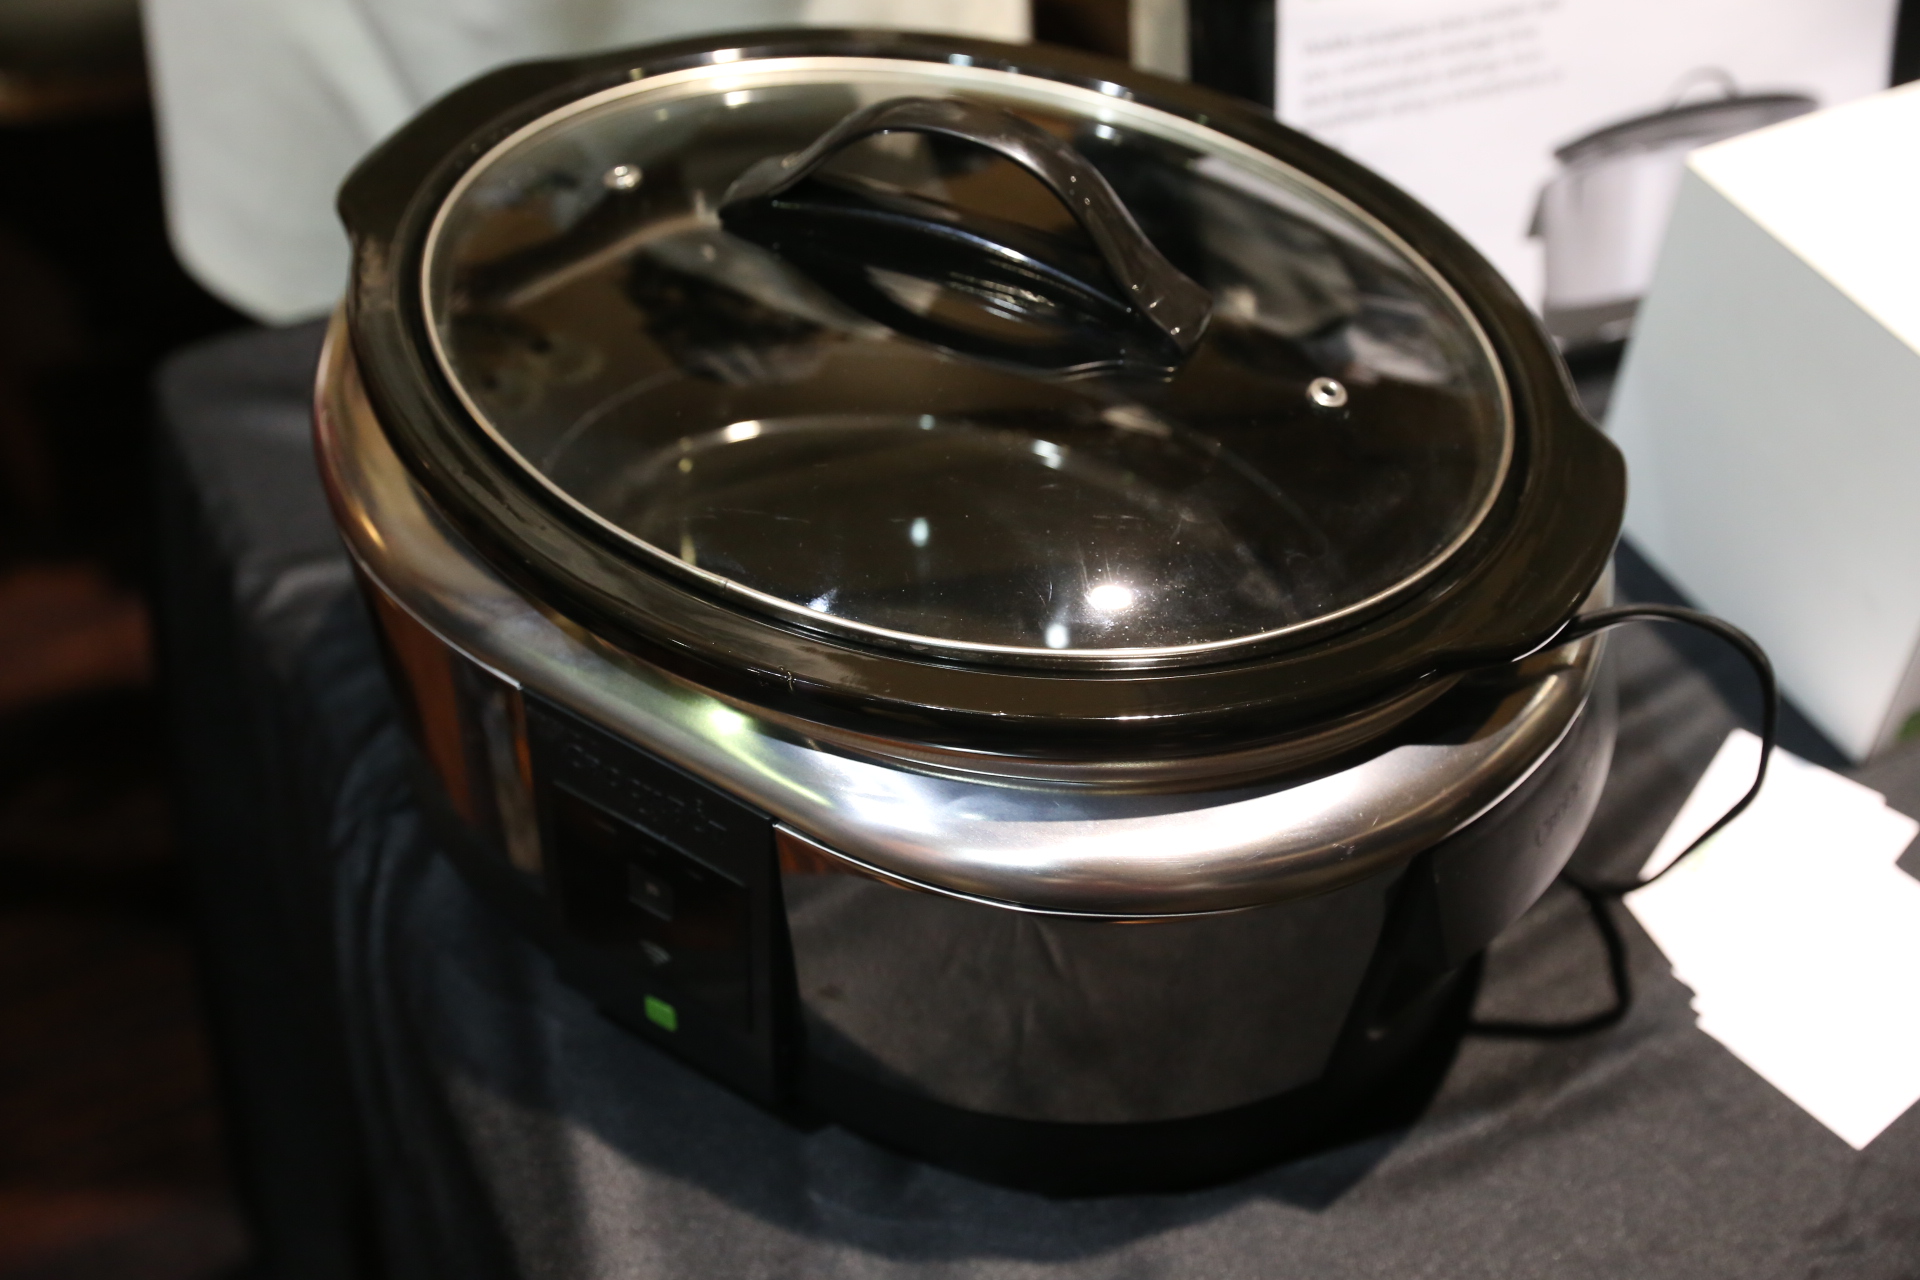 Belkin Crock-Pot Smart Slow Cooker review: Can WiFi make cooking